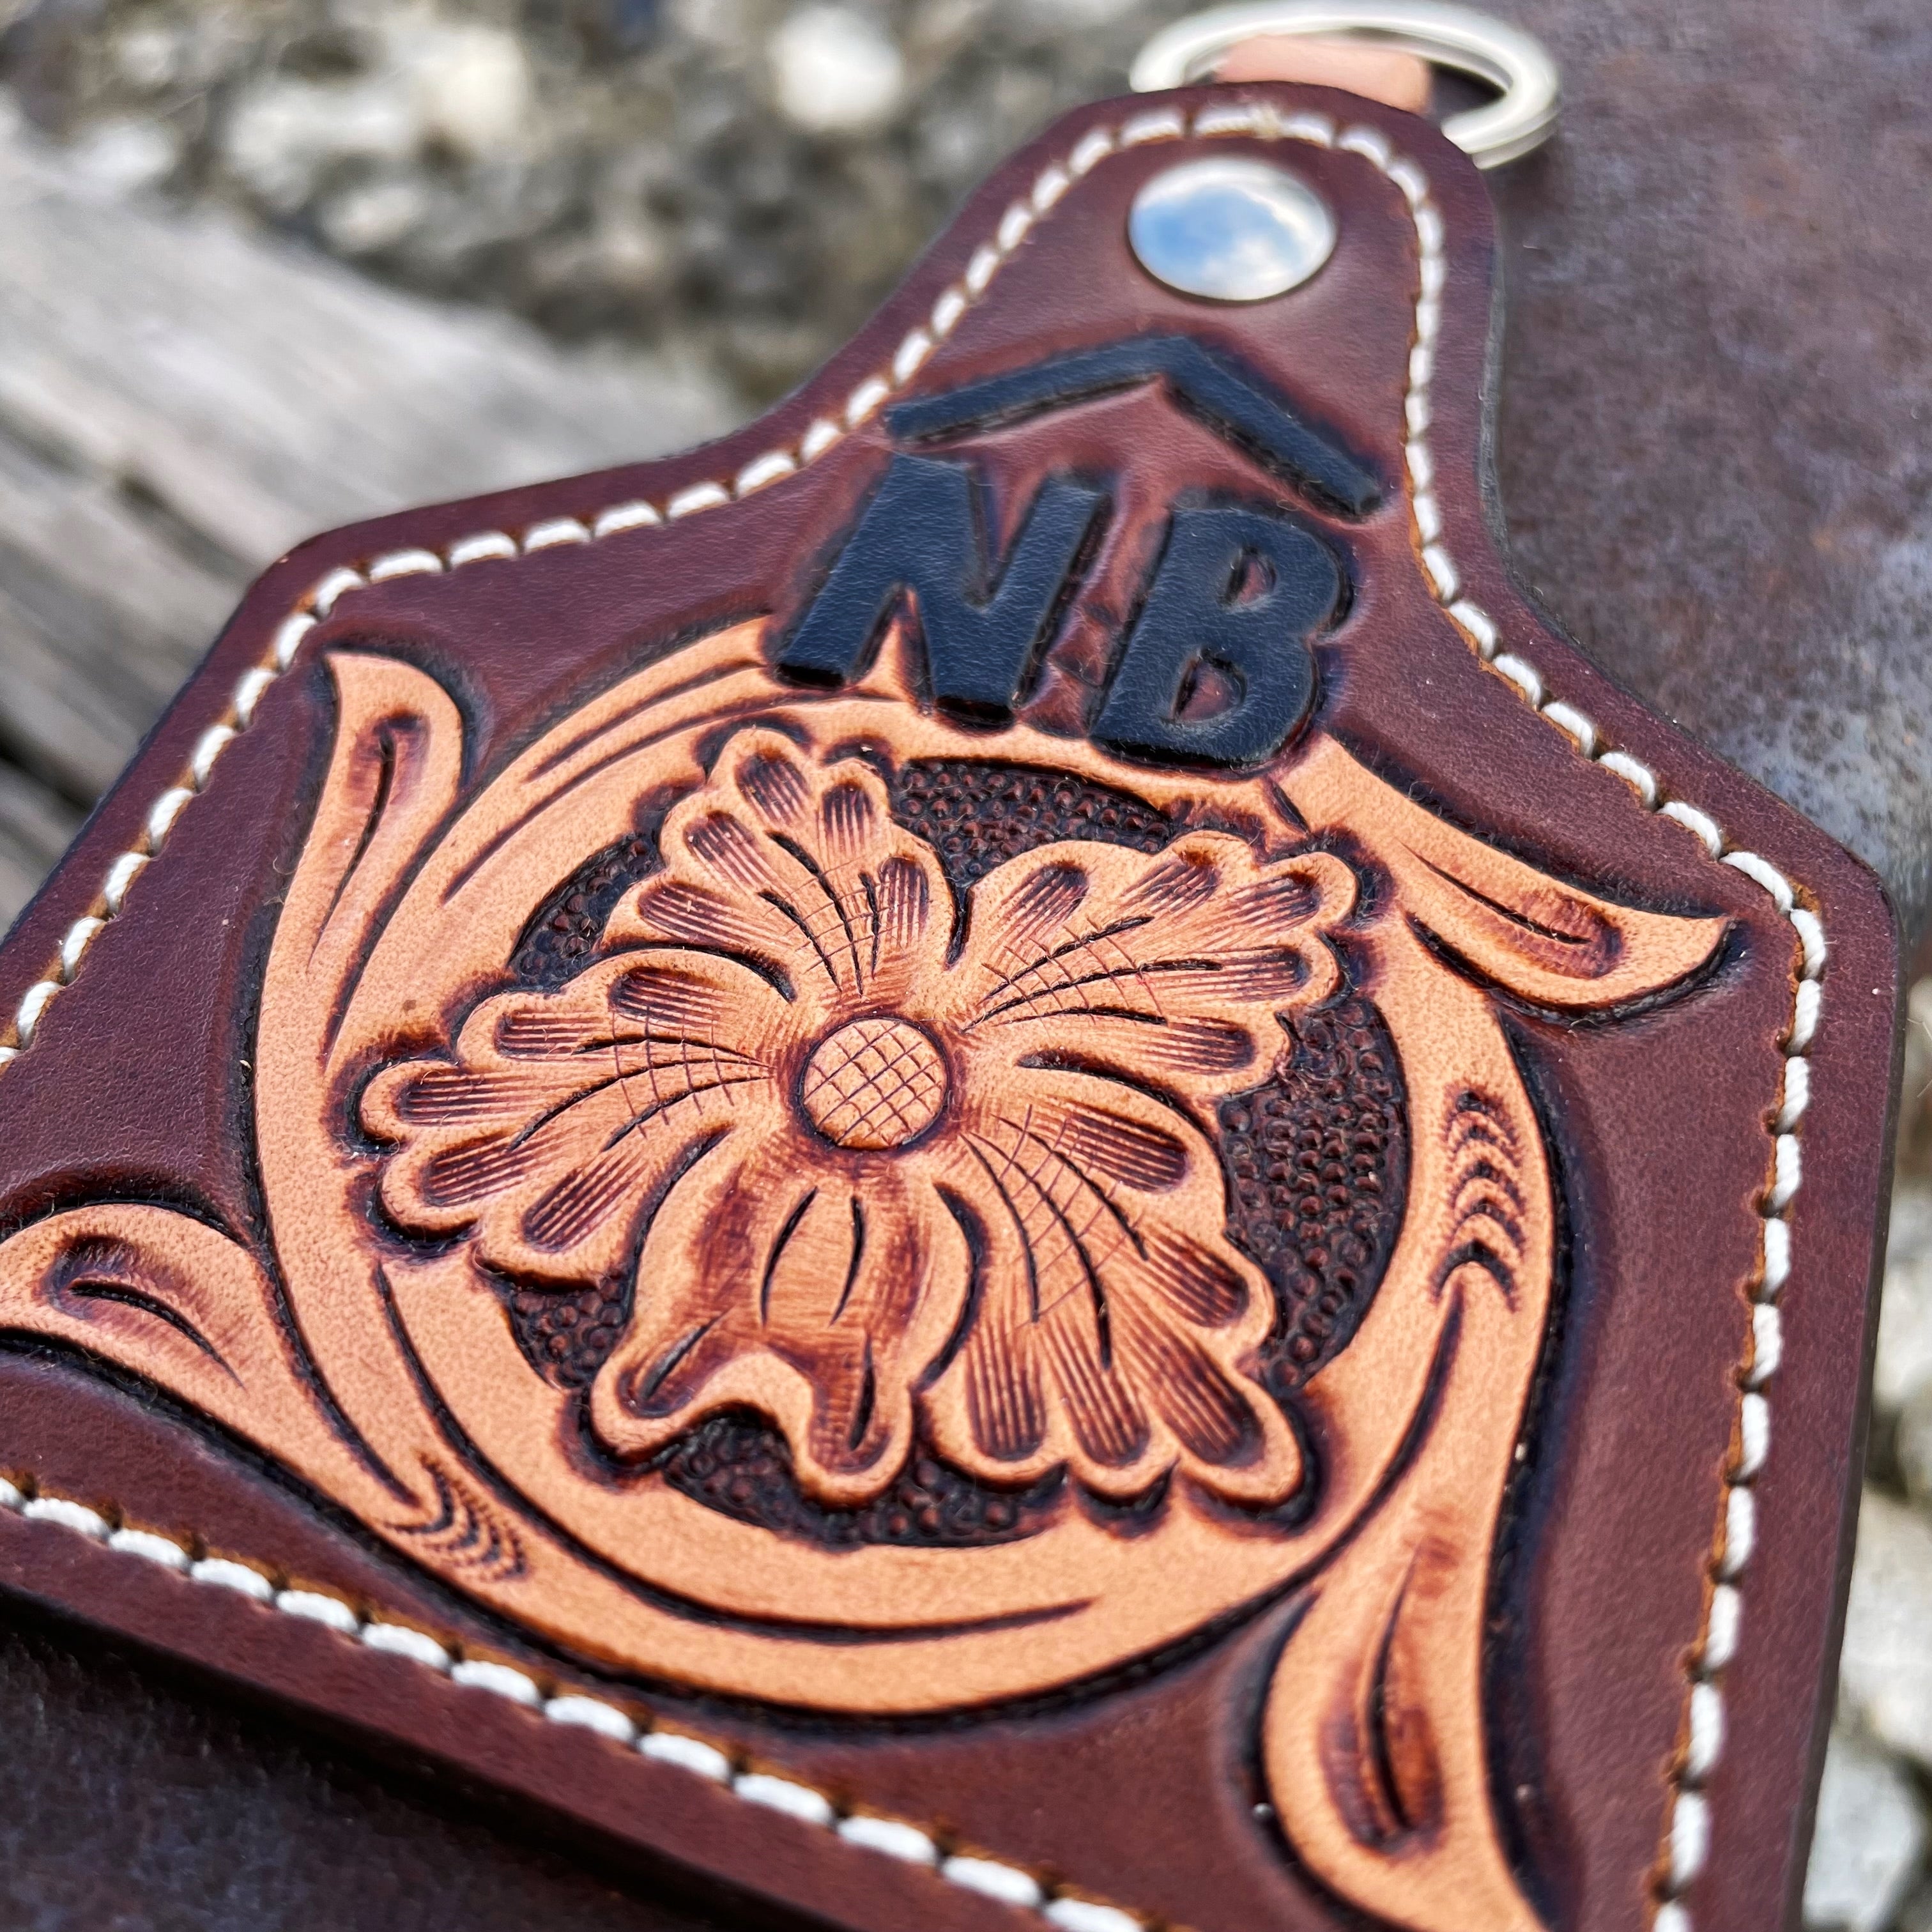 Yri Custom Designs Embroidered Leather Tiger Key Tag Orange